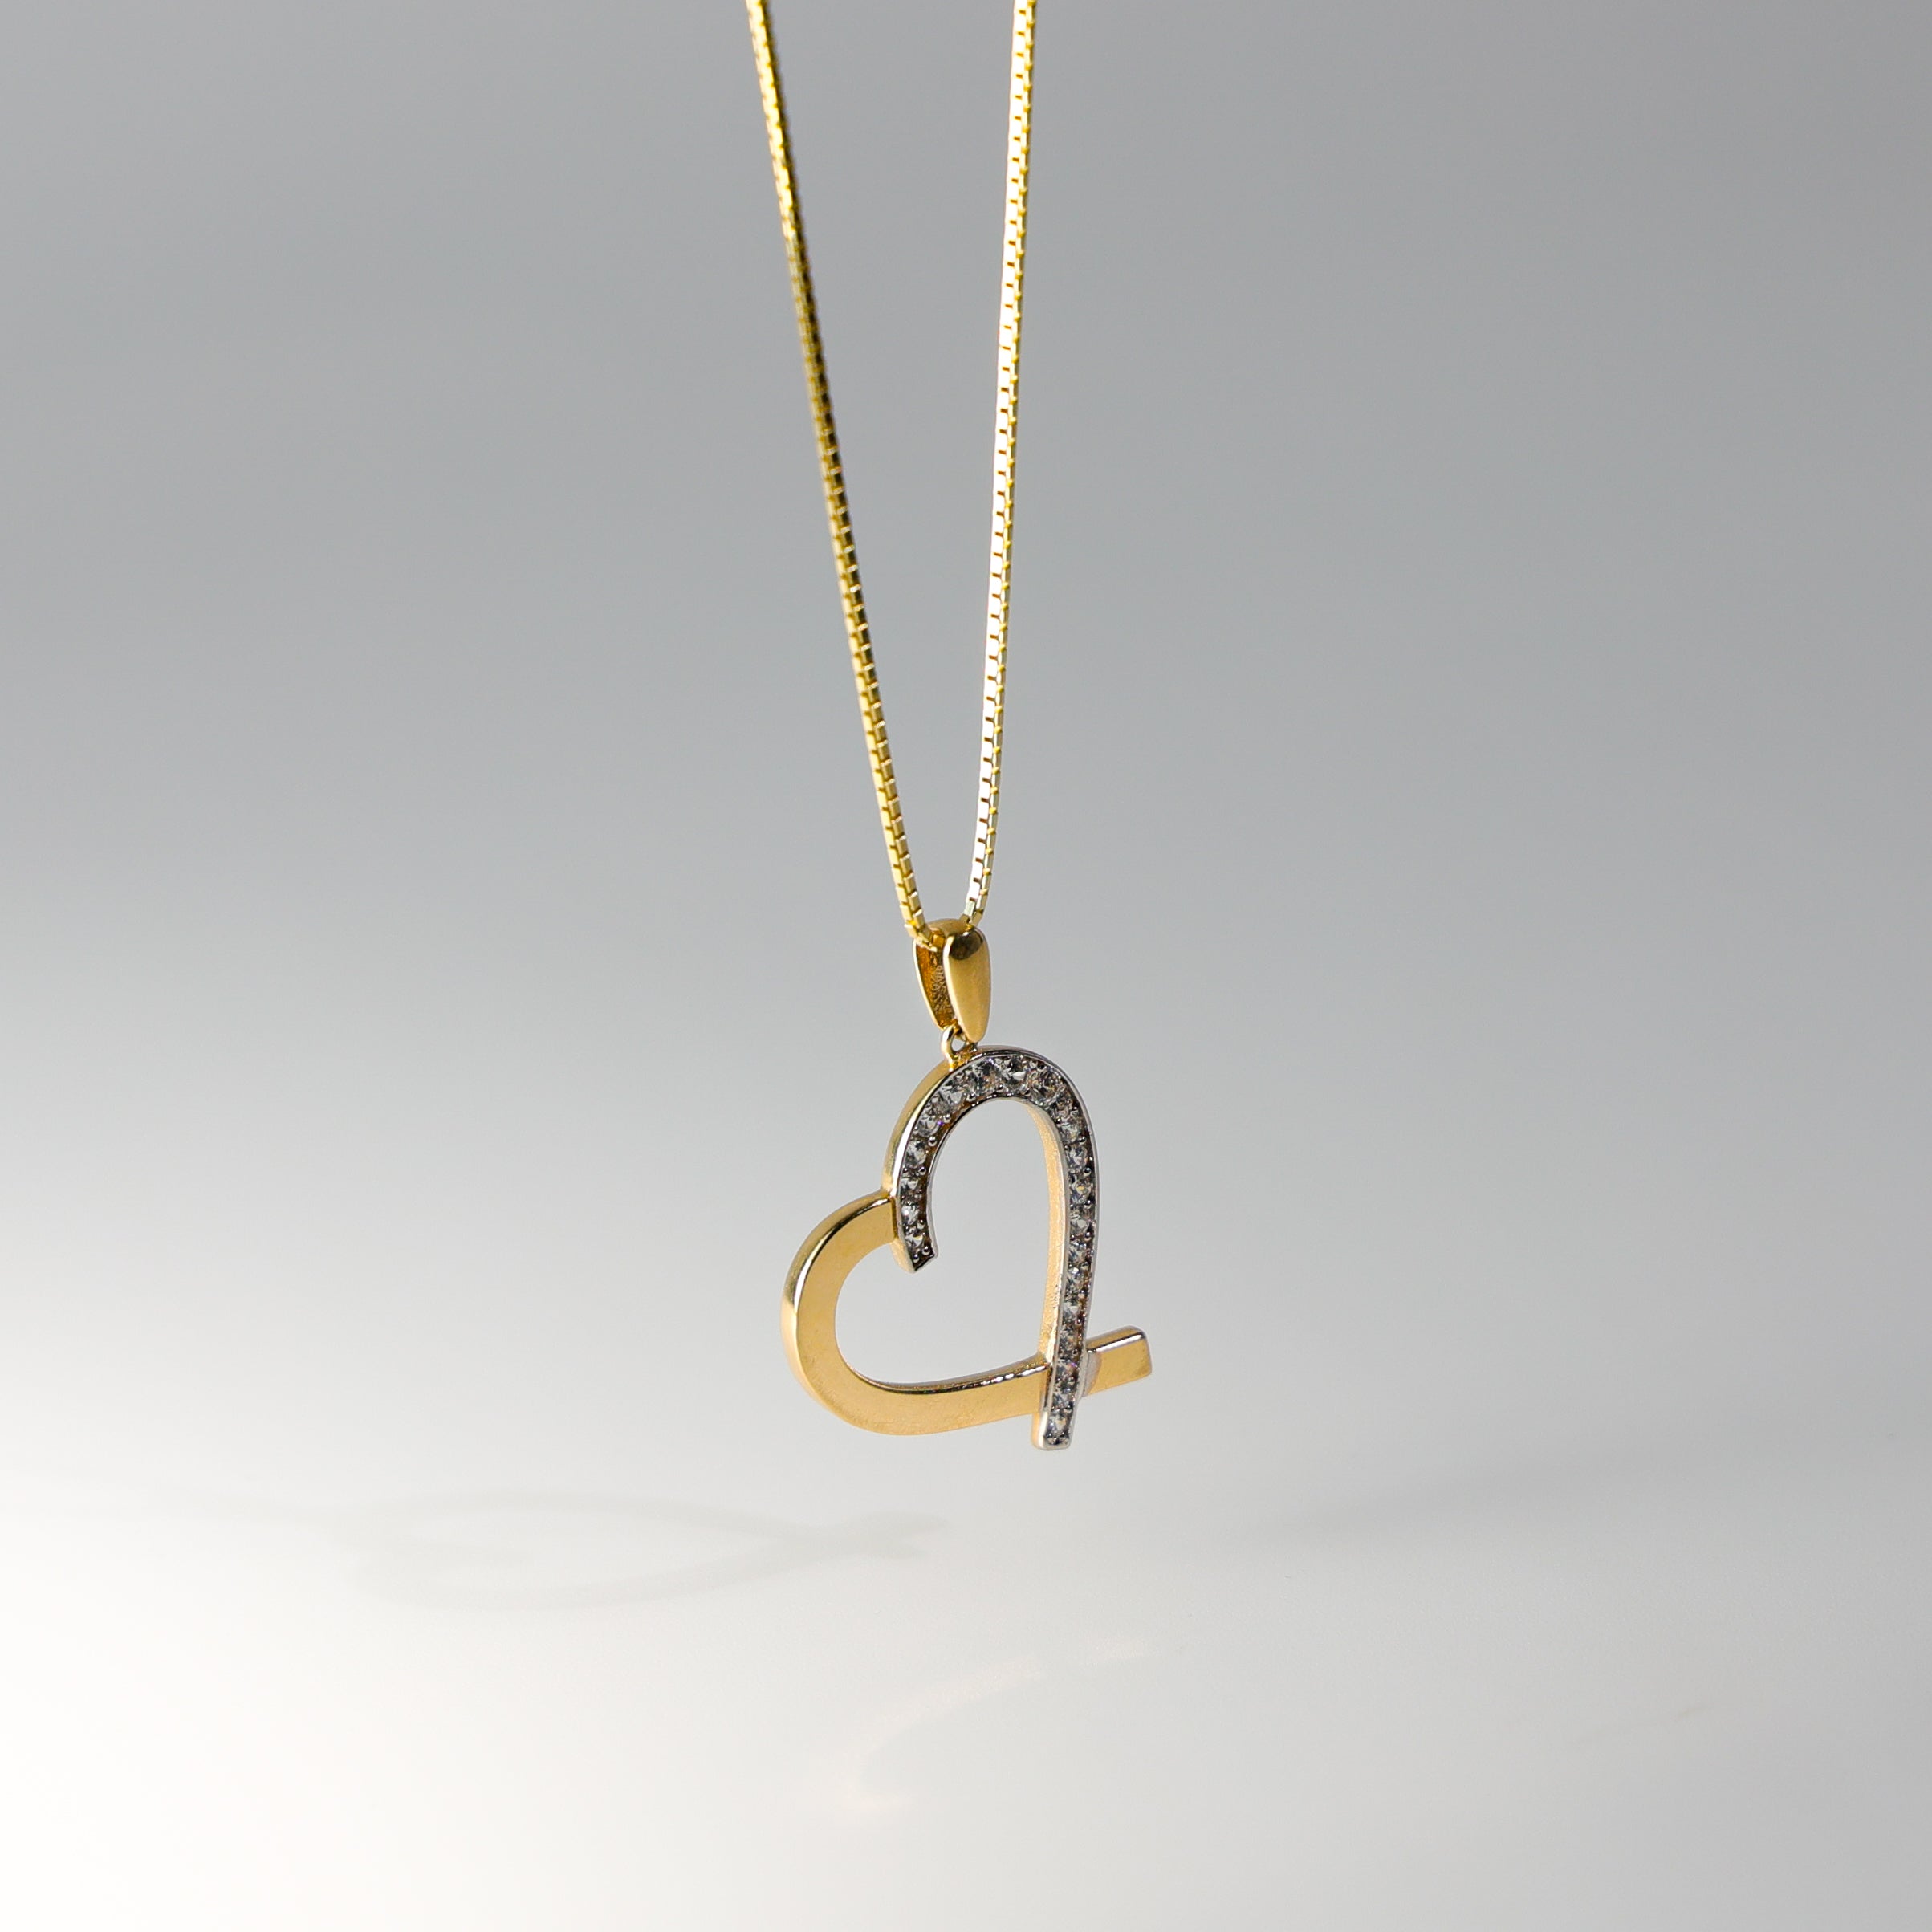 Gold CZ Stones Heart Pendant Model-1770 - Charlie & Co. Jewelry